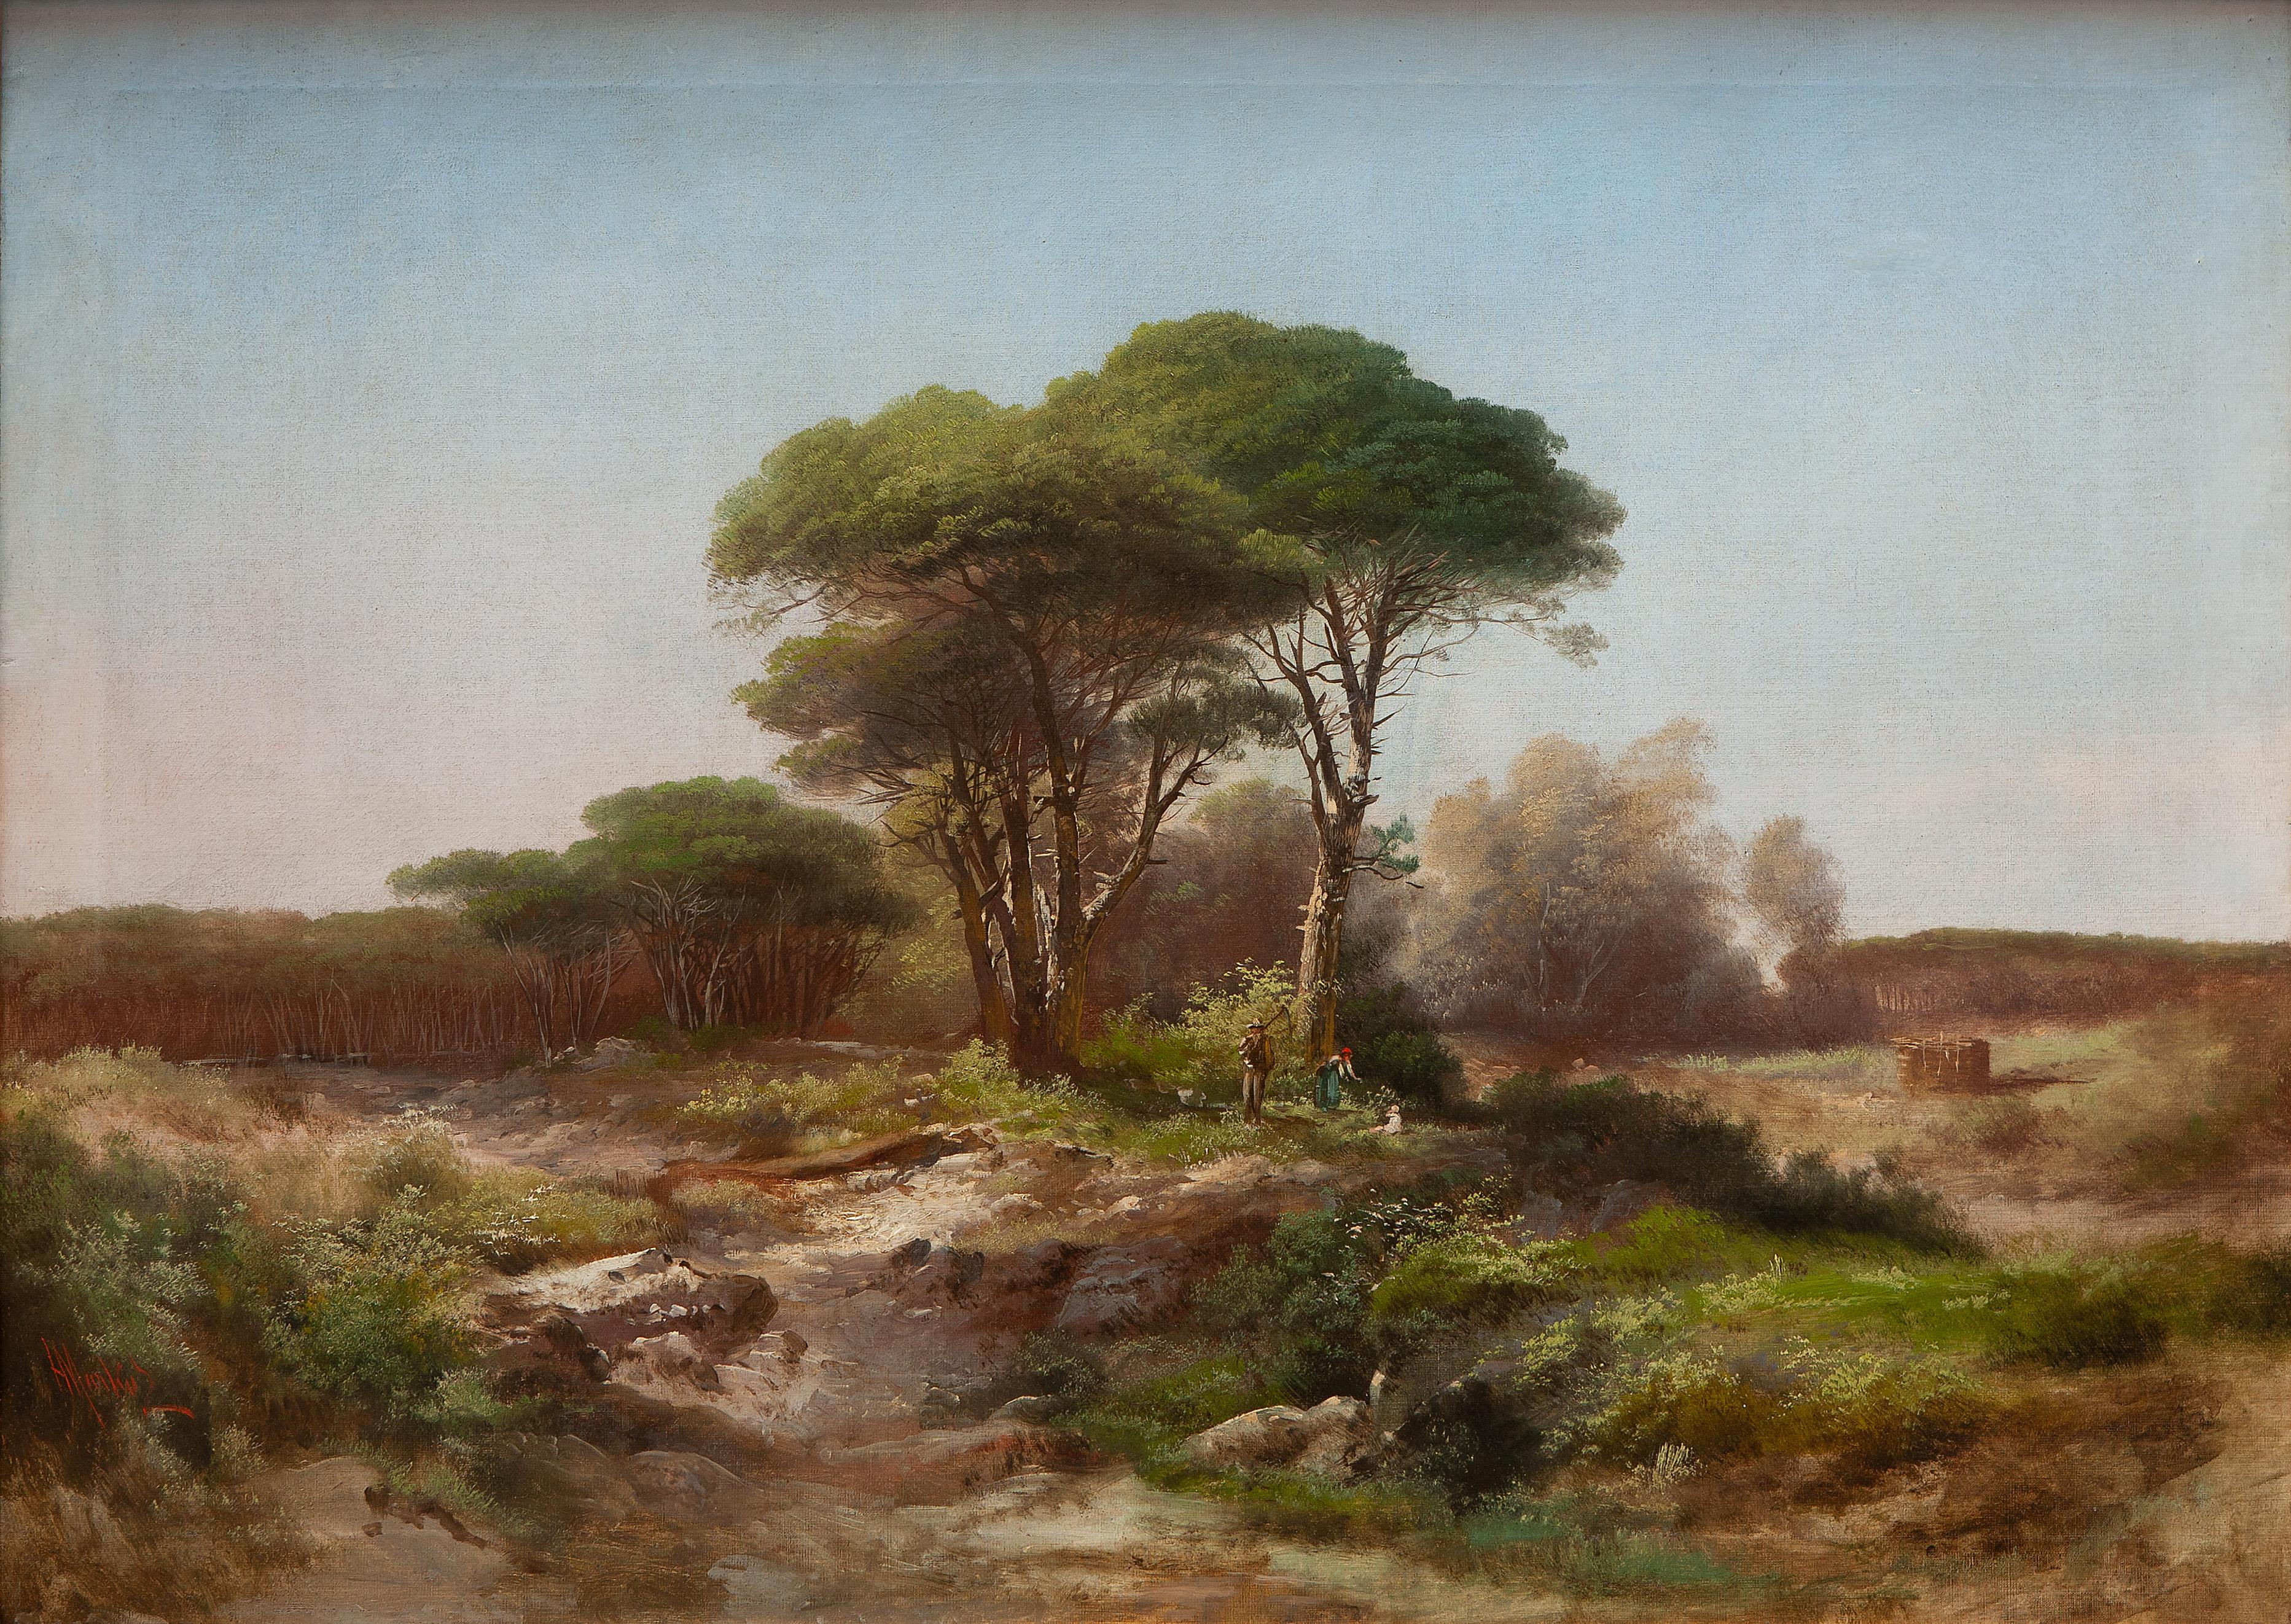 Ligurian pine forest - Painting by Henry Markò (Firenze 1855-1921)